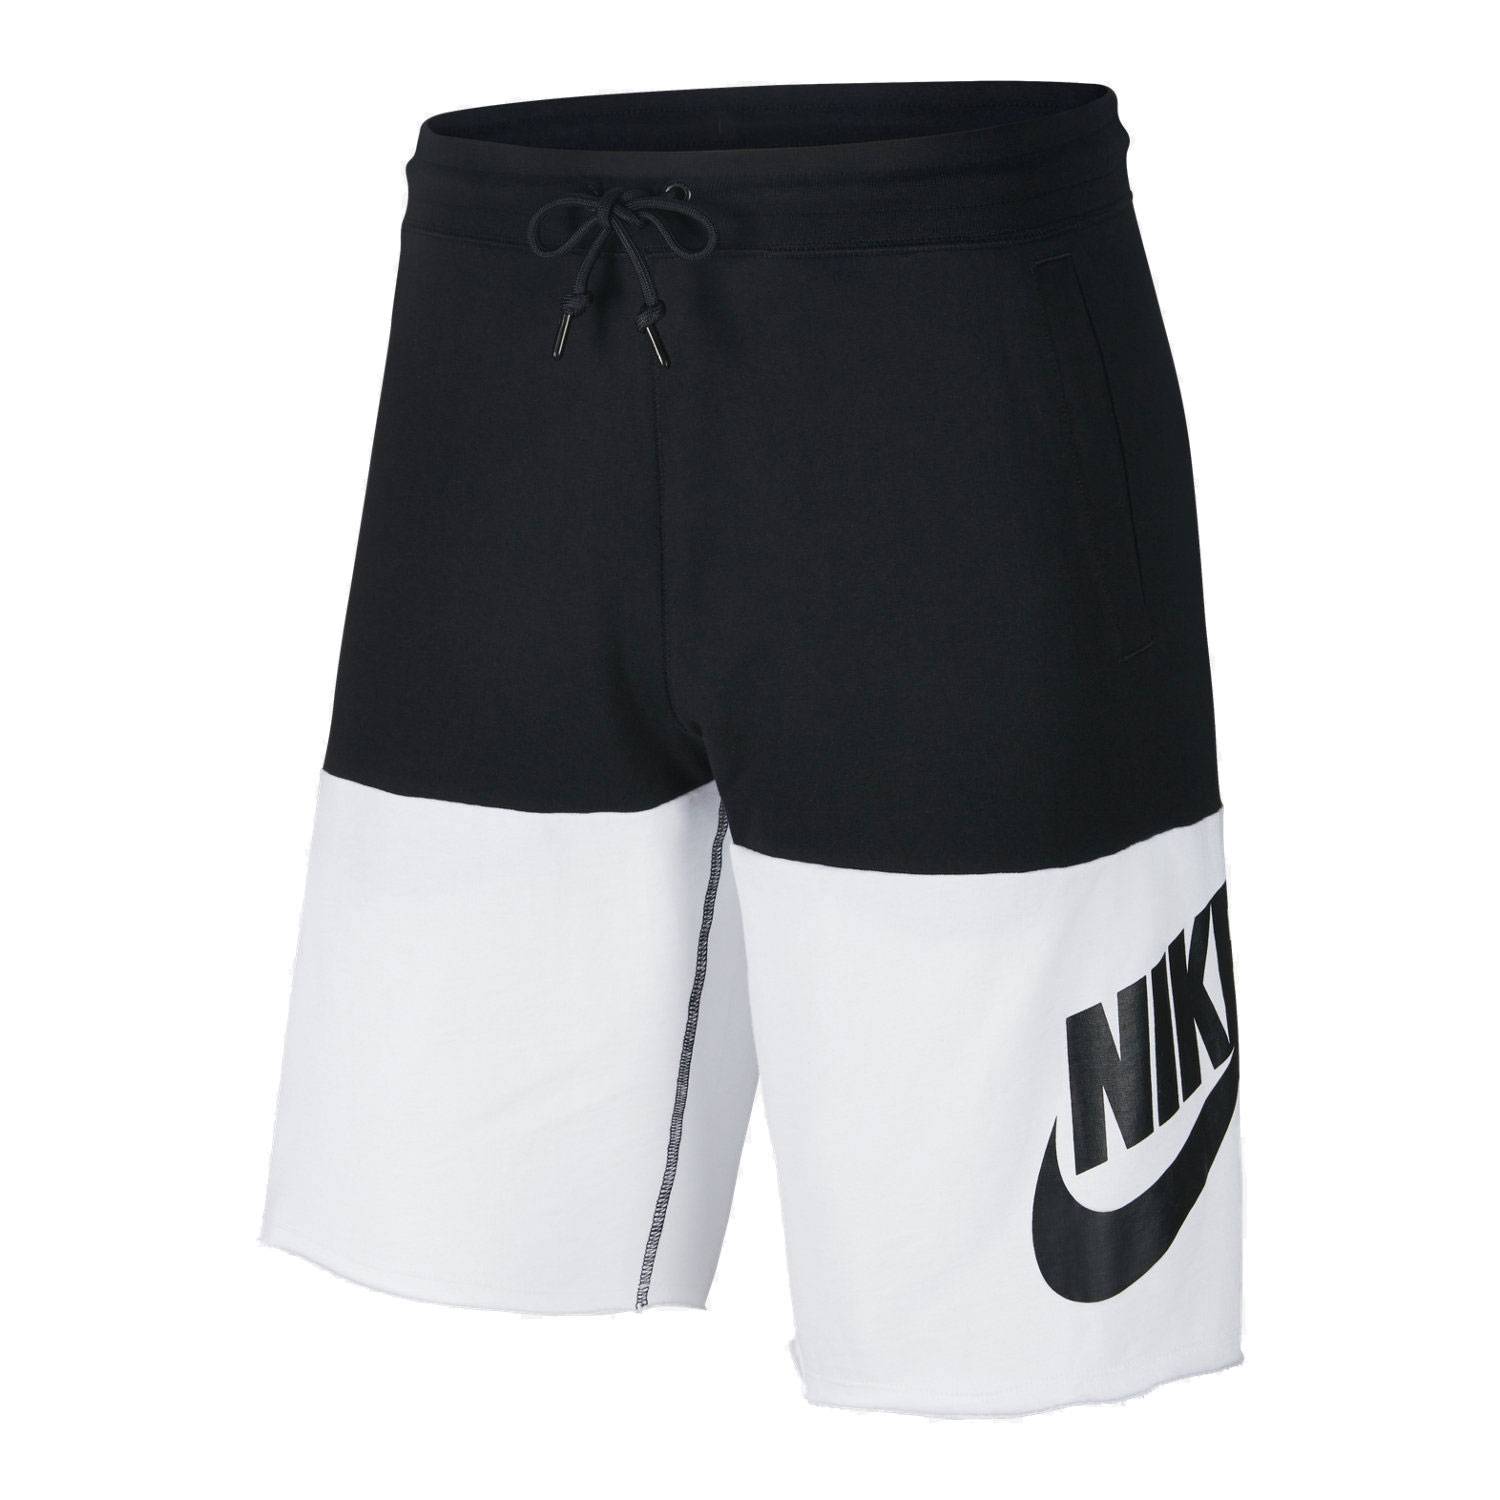 Шорты Nike Alumni shorts gx1 Black